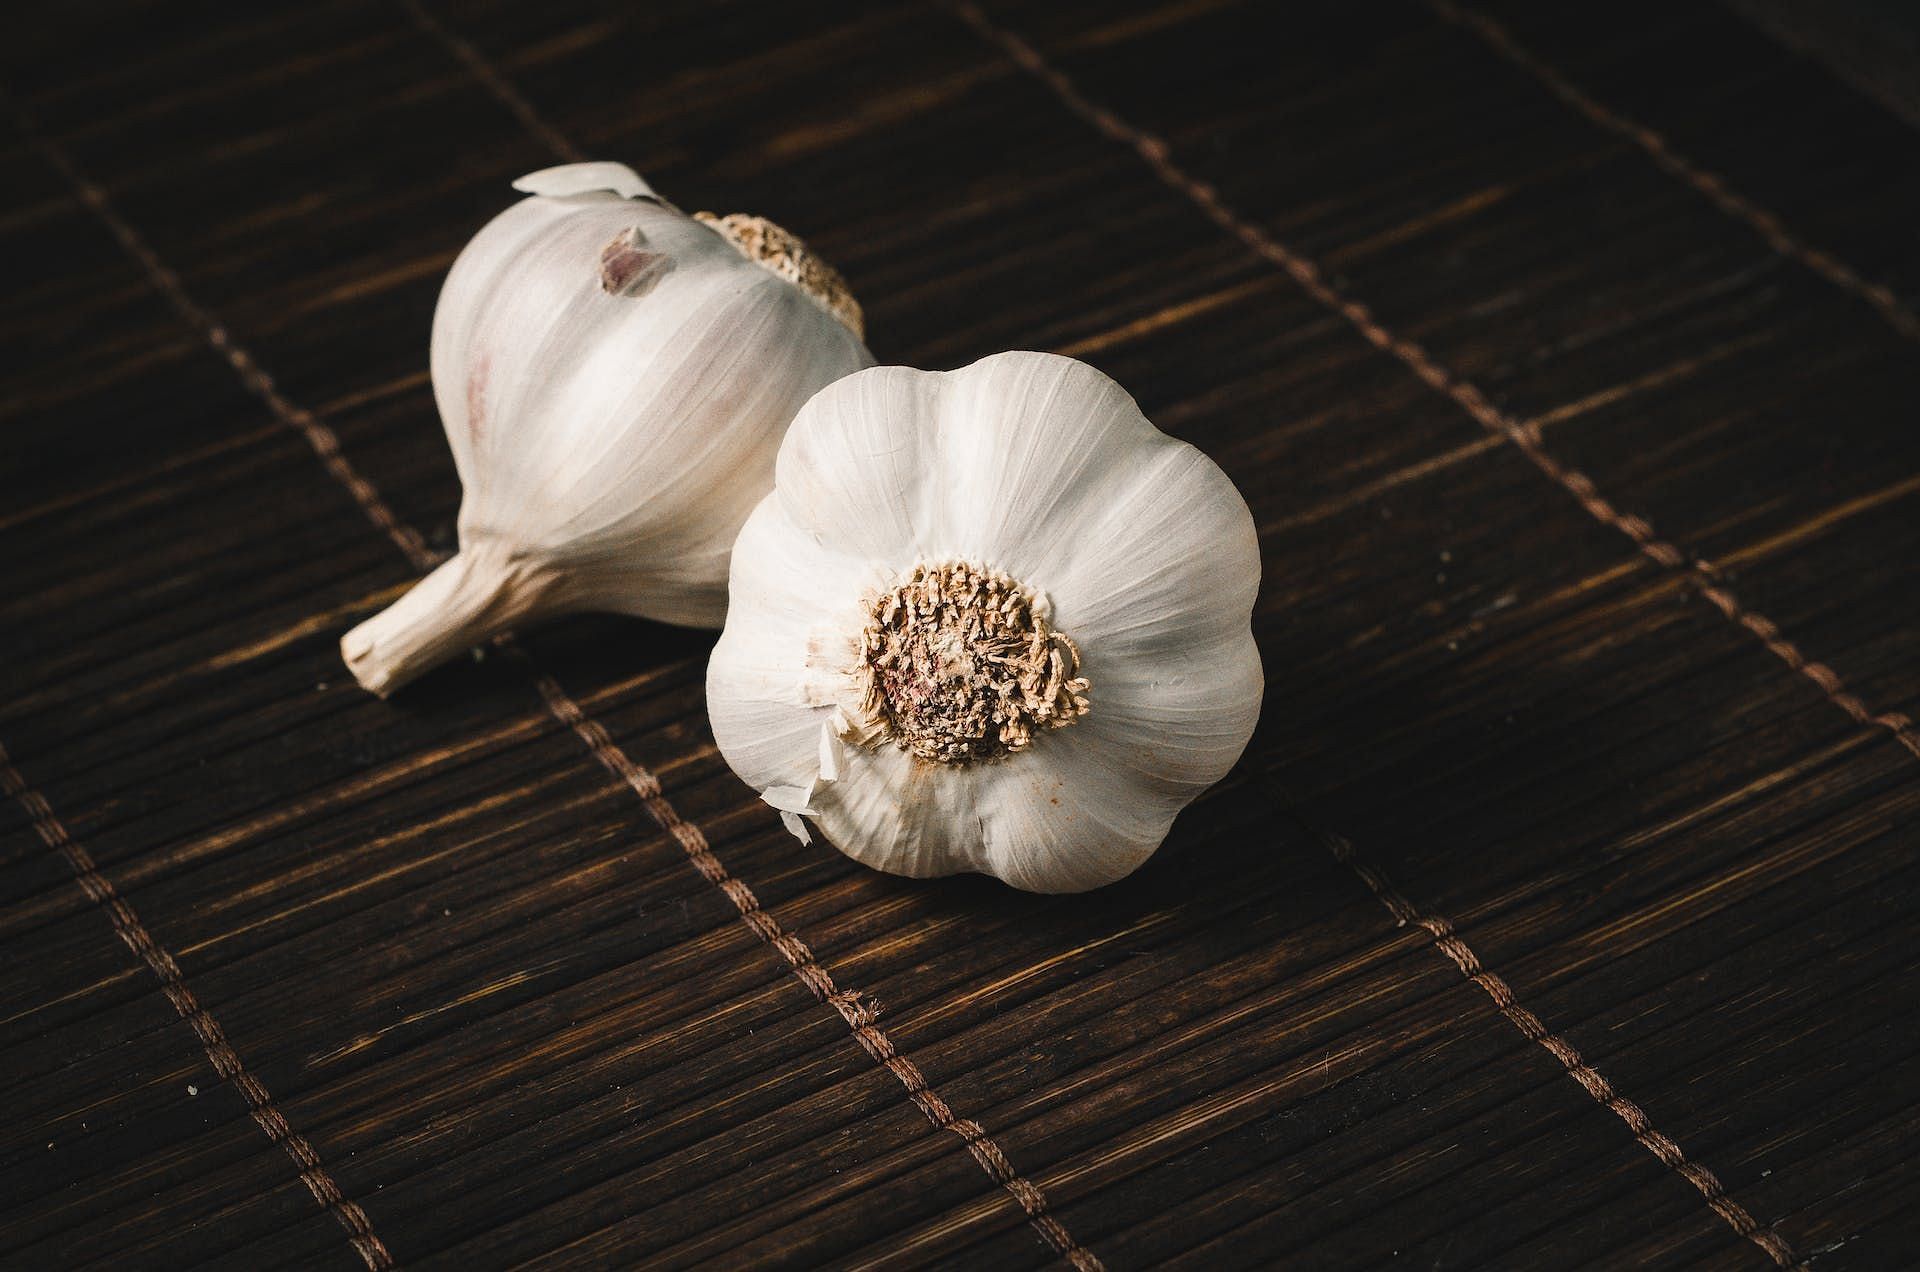 Garlic produces more norepinephrine. (Image via Pexels/Isabella Mendes)